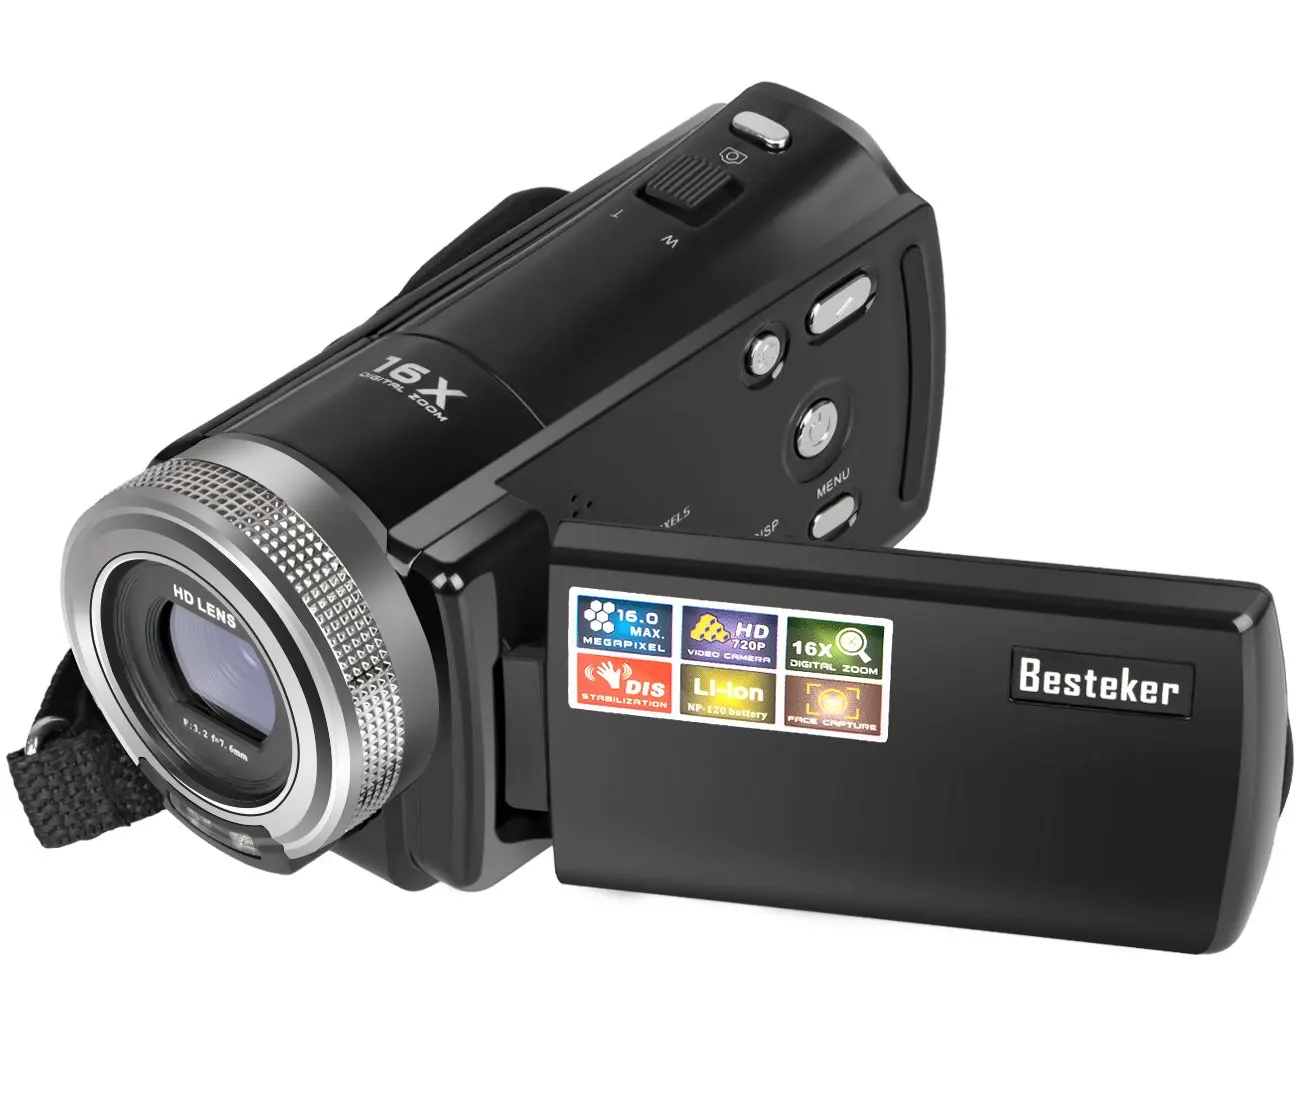 Видеокамера купить магазин. DDV-360 12 Megapixel цифровая видеокамера. Линейка видеокамер Ordro. Hdv-802s HD видеокамера. Видеокамера Sony HD 720p 20.0 Mega Pixels.